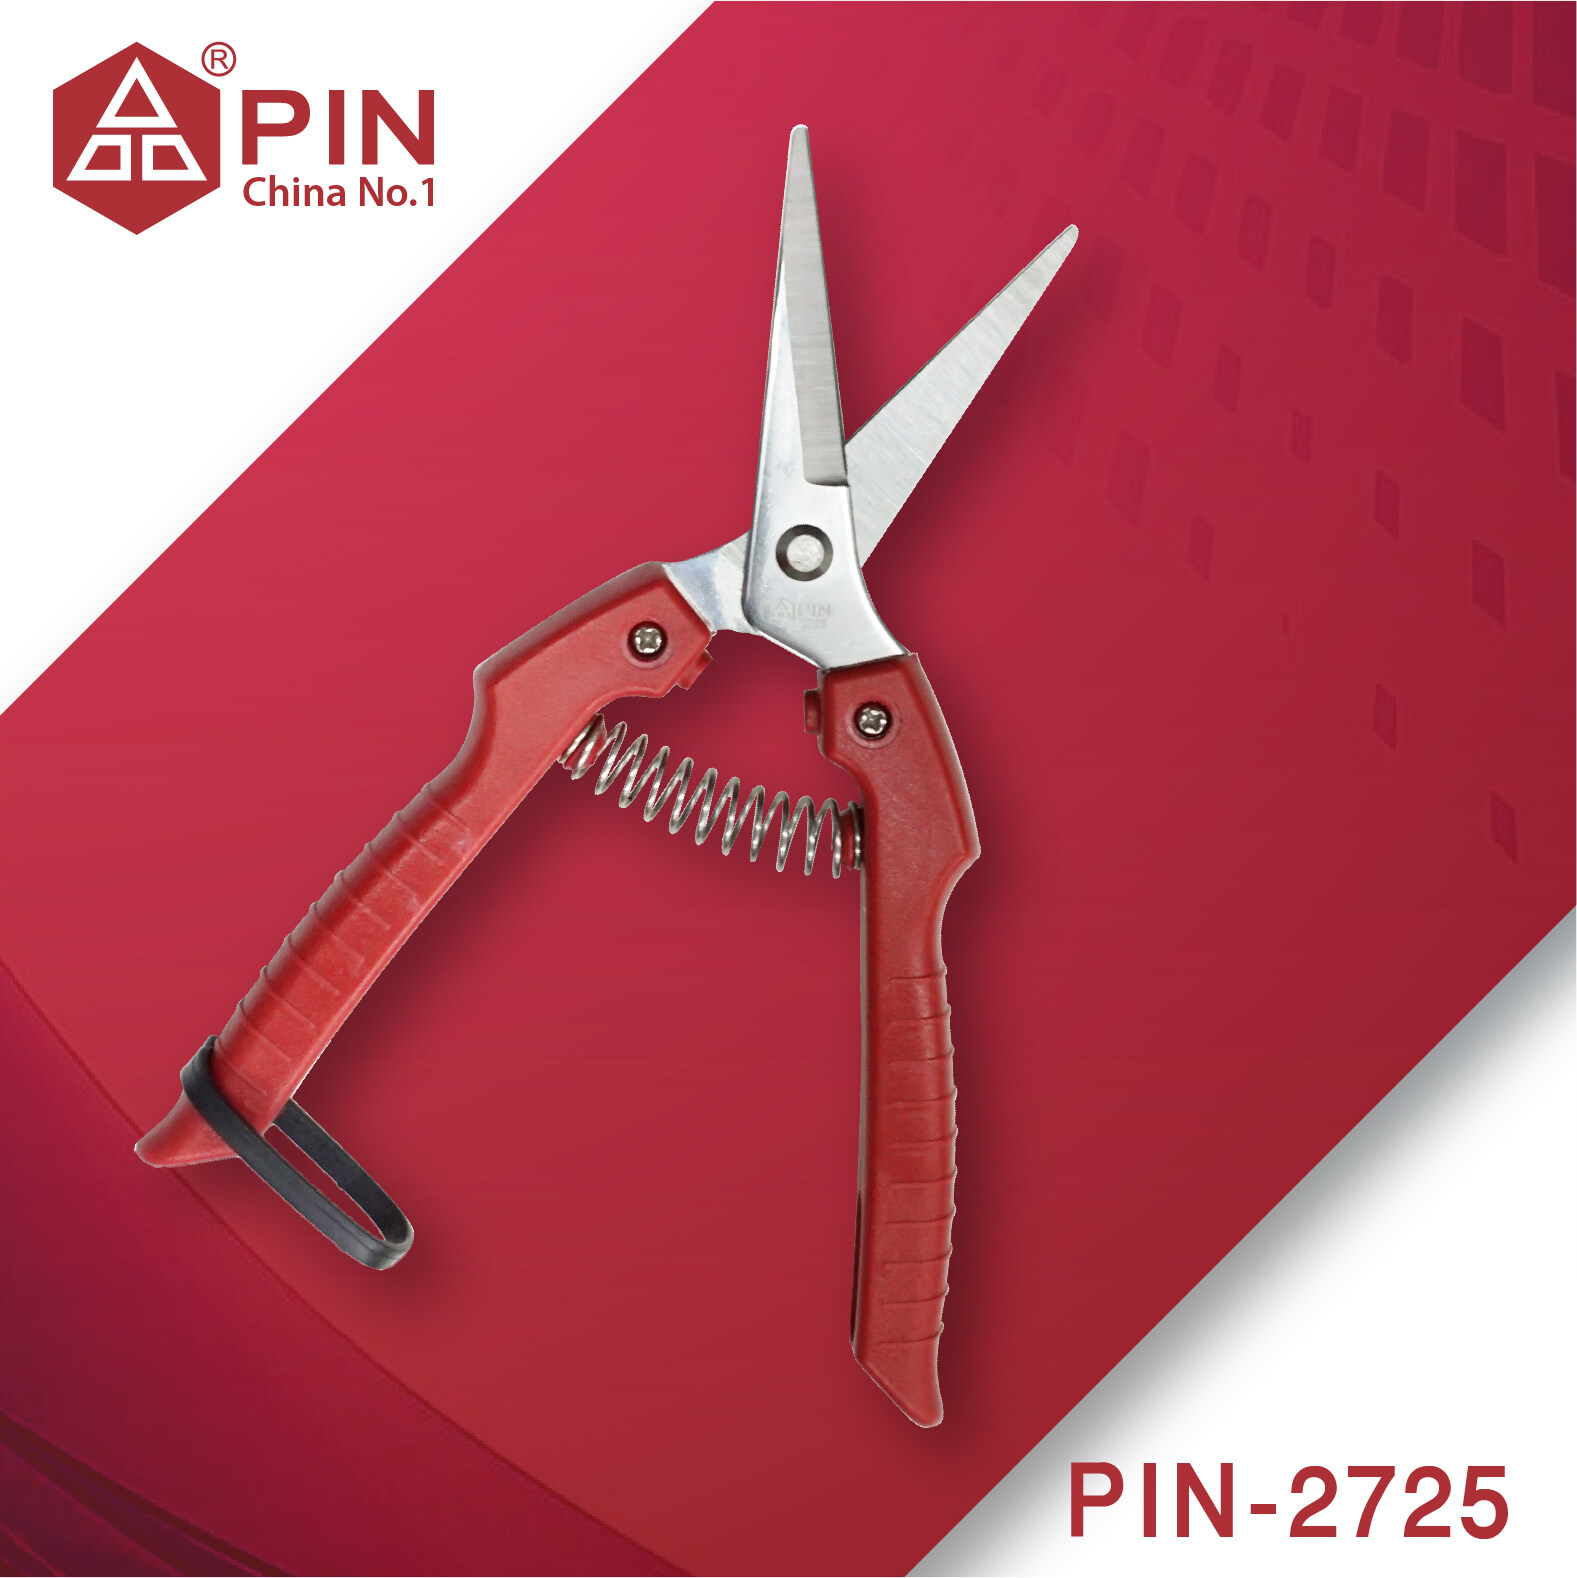 PIN กรรไกร ตัดกิ่งไม้ ตัดแต่งกิ้งไม้ PIN-2725 ขนาด 7.2 นิ้ว